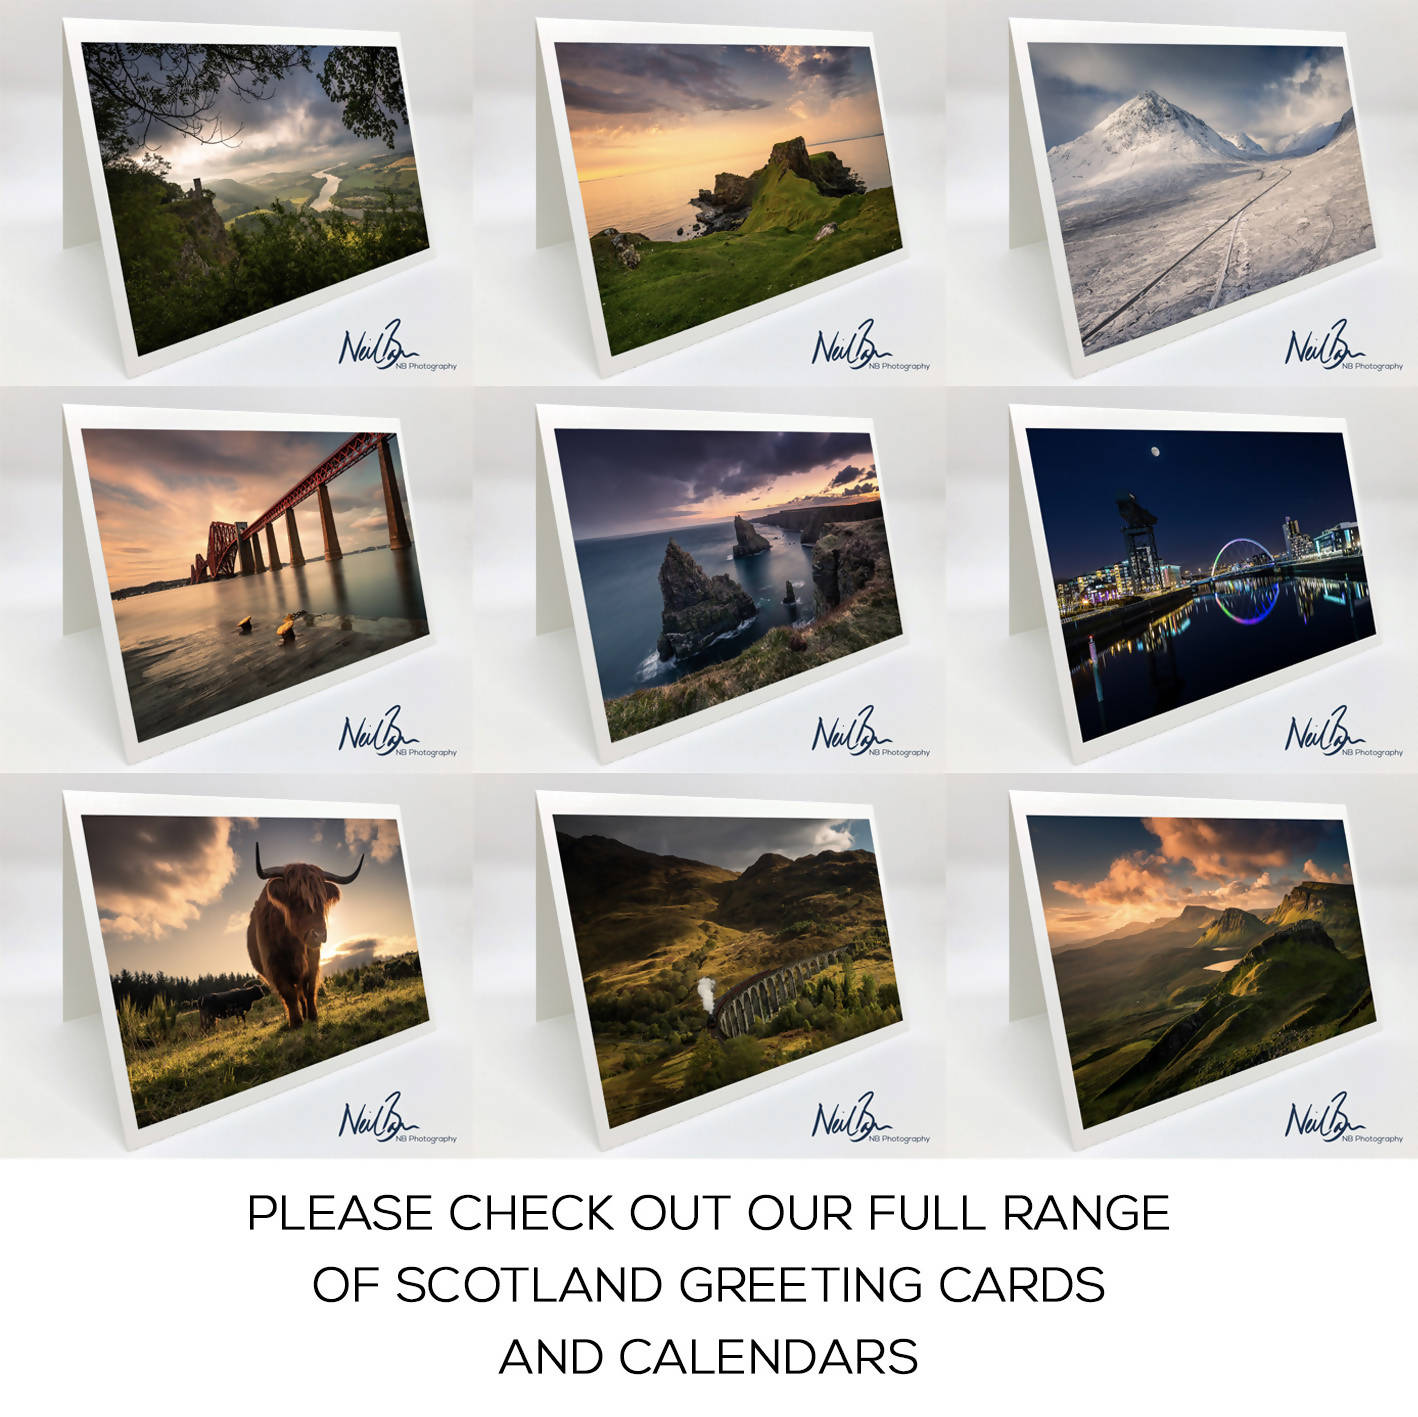 Arran, Cumbrae & Largs from Brisbane Glen, Ayrshire - Scottish Greeting Card - Blank Inside